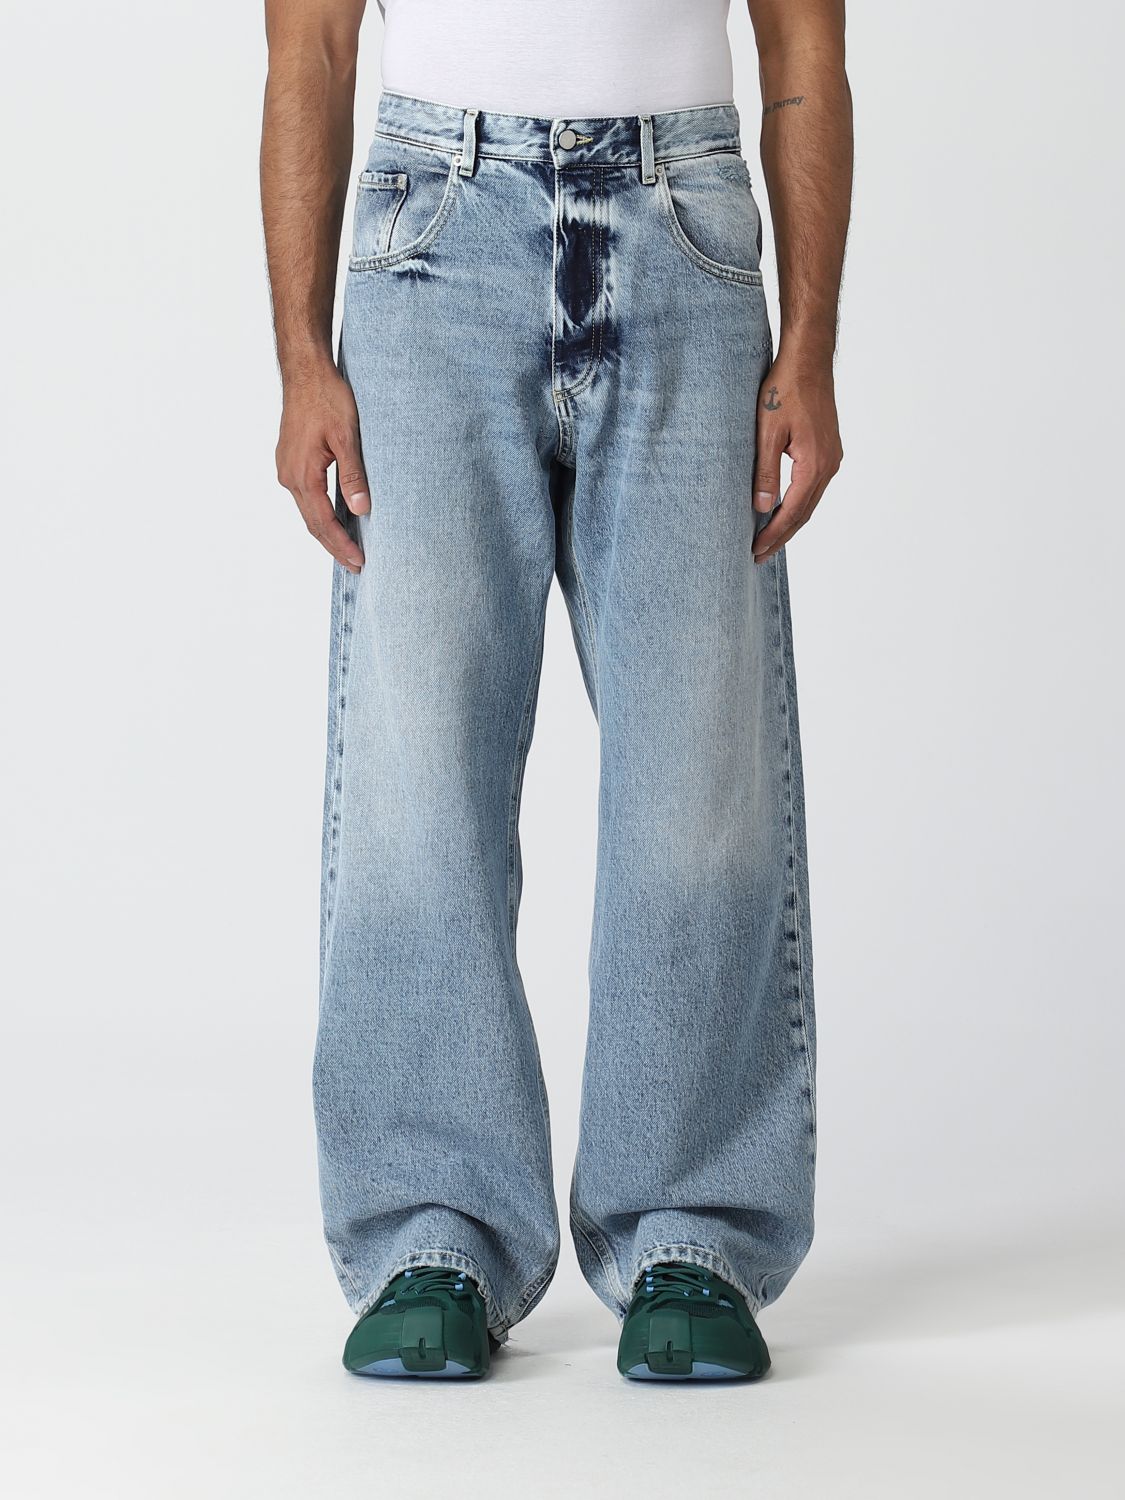 ICON DENIM LOS ANGELES: jeans for man - Stone Washed | Icon Denim Los ...